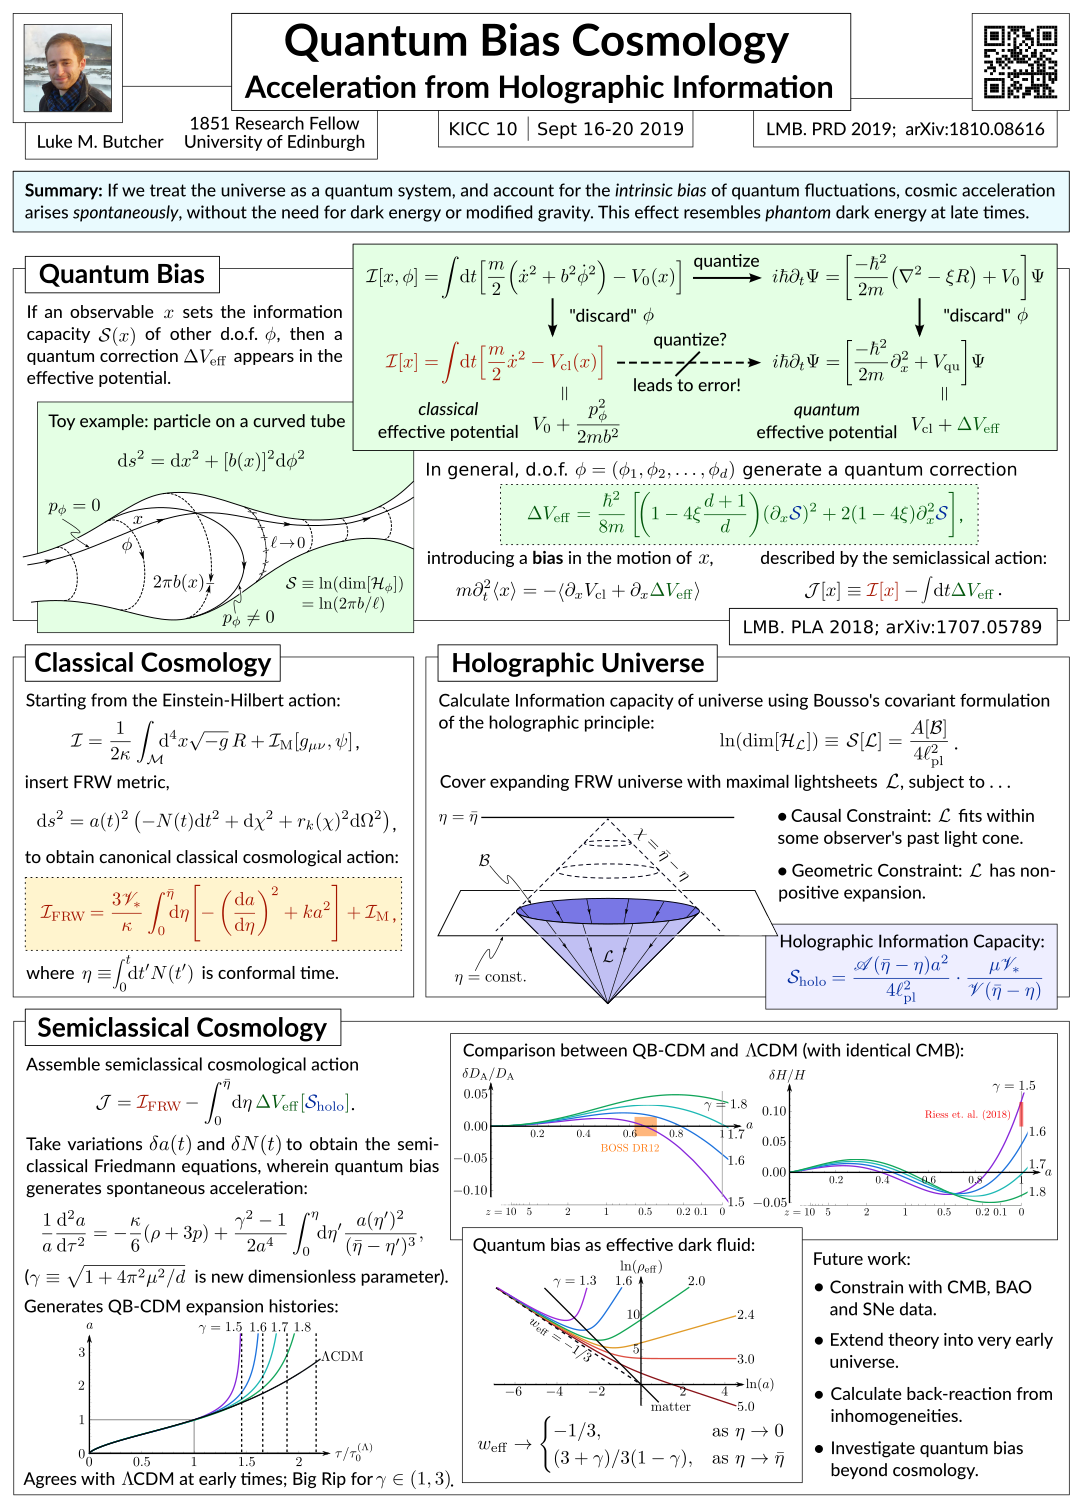 Quantum Bias Cosmology Poster